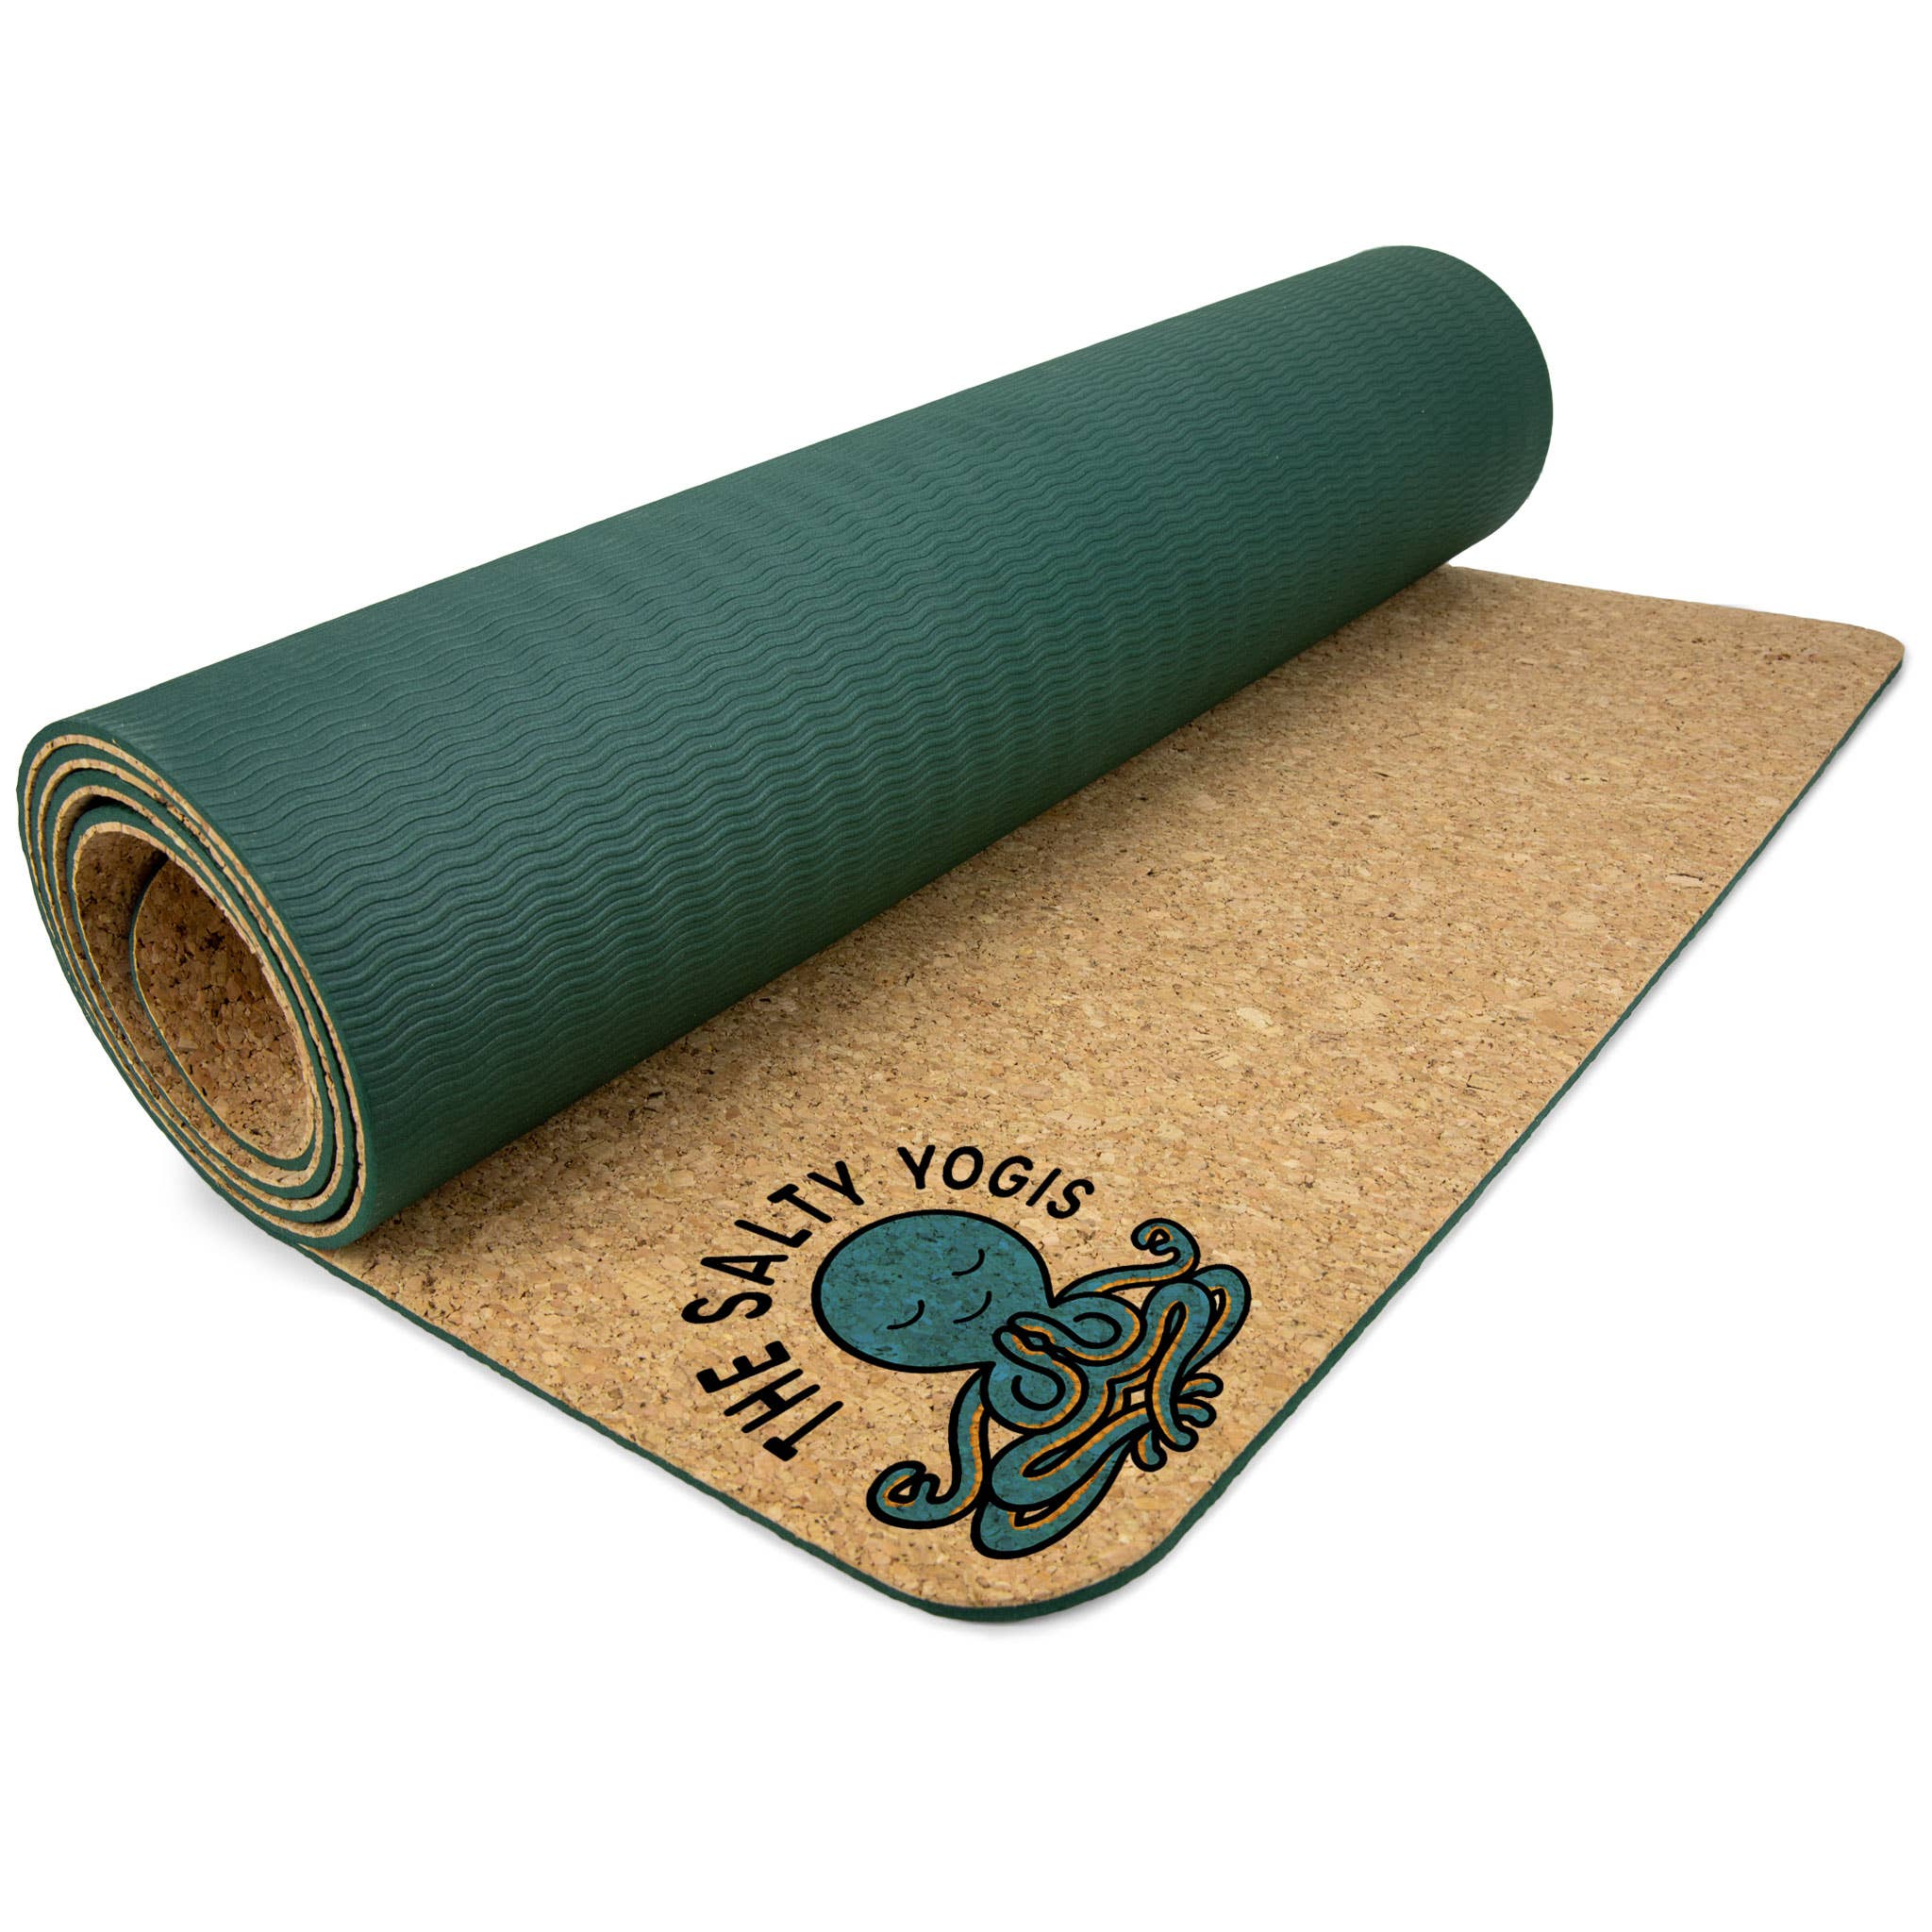 Sac de transport en liège Myga pour tapis de yoga